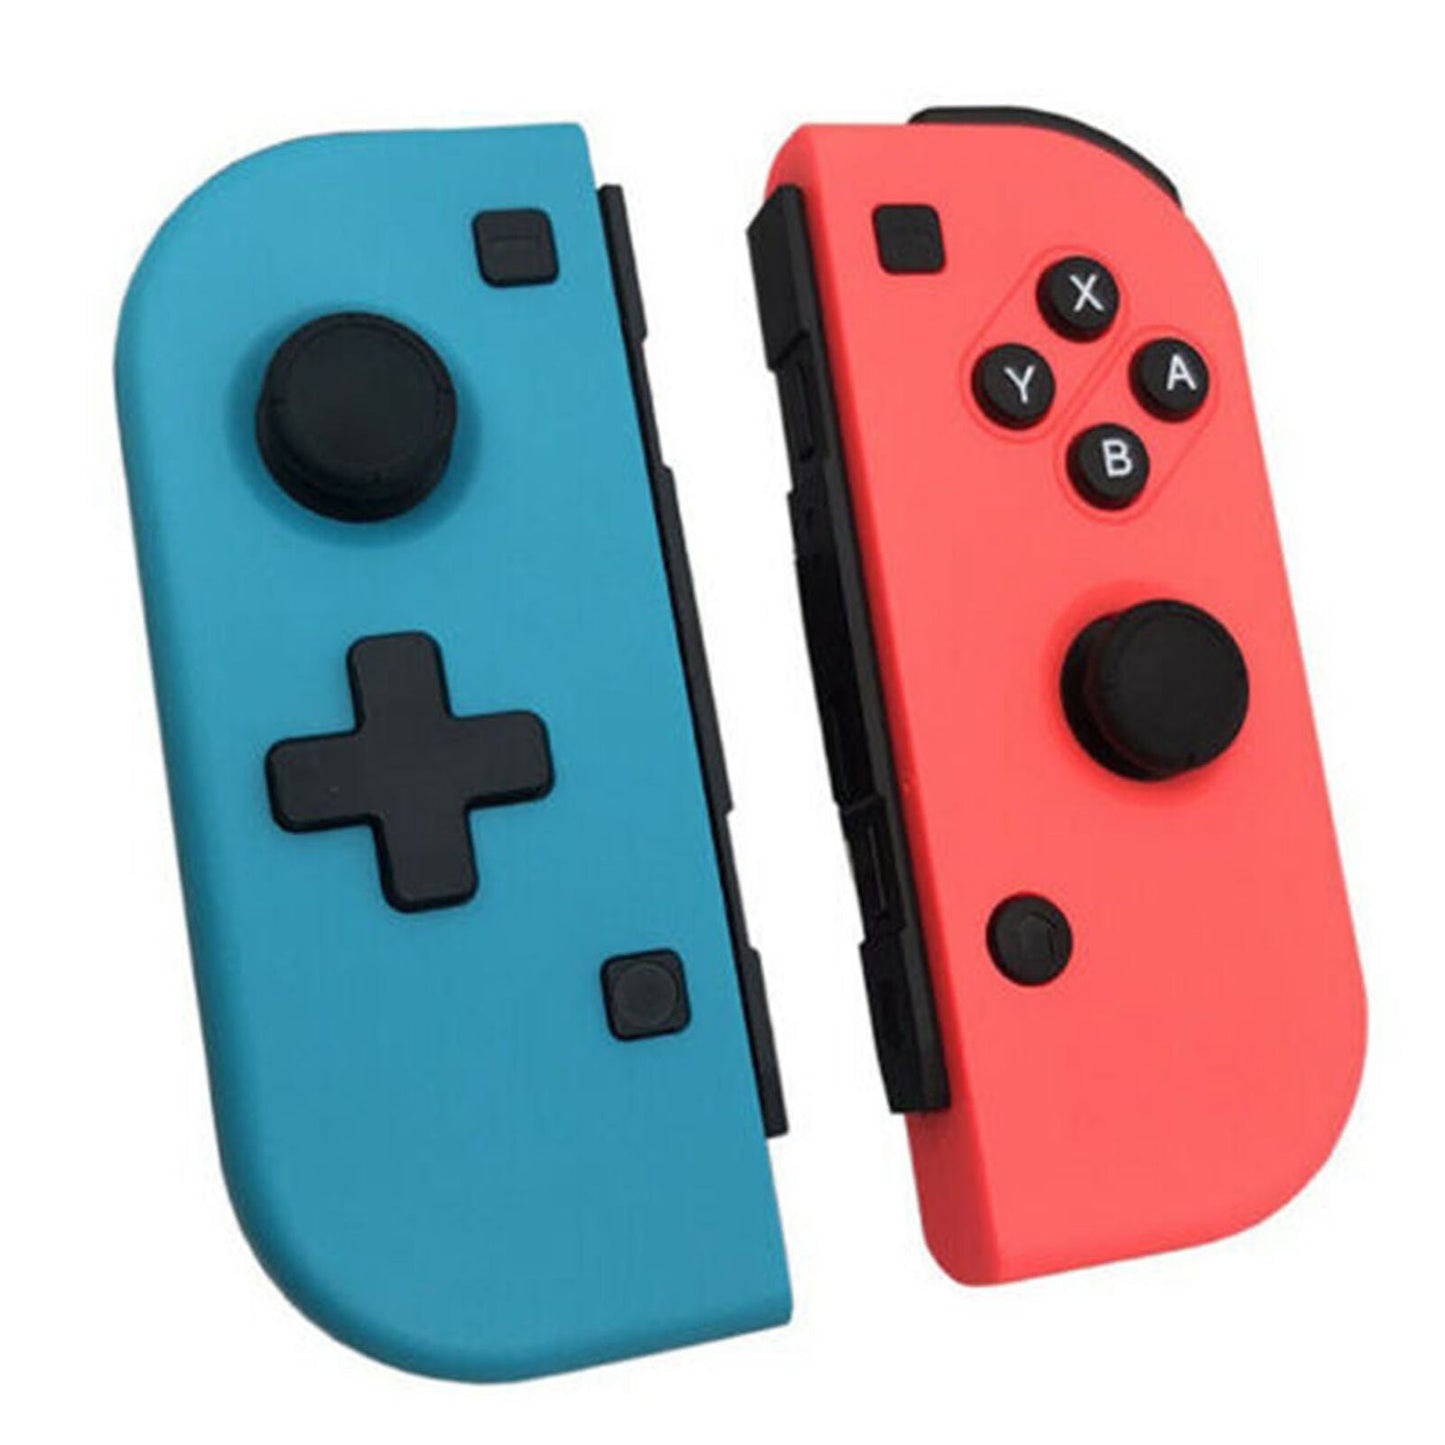 Joy-Cons para Nintendo Switch